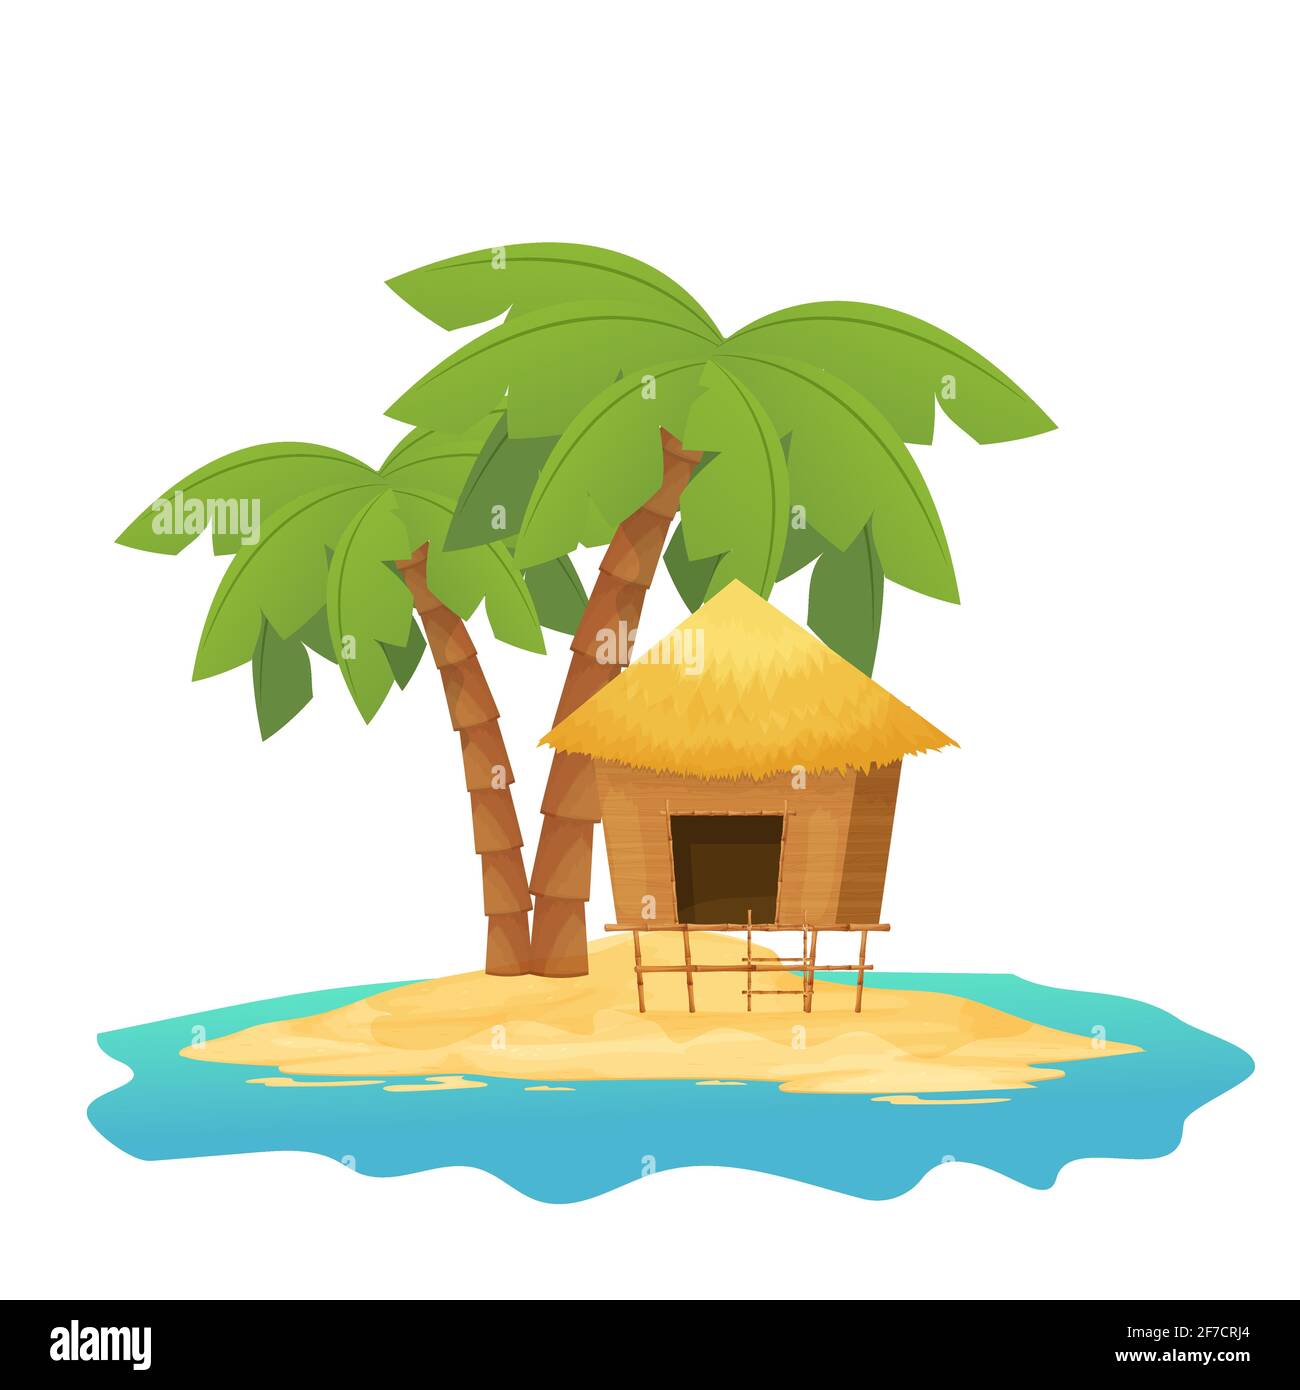 Cabaña de playa o bungalow con techo de paja, madera en isla tropical con palmeras en estilo de dibujos animados aislados sobre fondo blanco. Cabaña de bambú, pequeña casa objeto exótico. Ilustración vectorial Ilustración del Vector